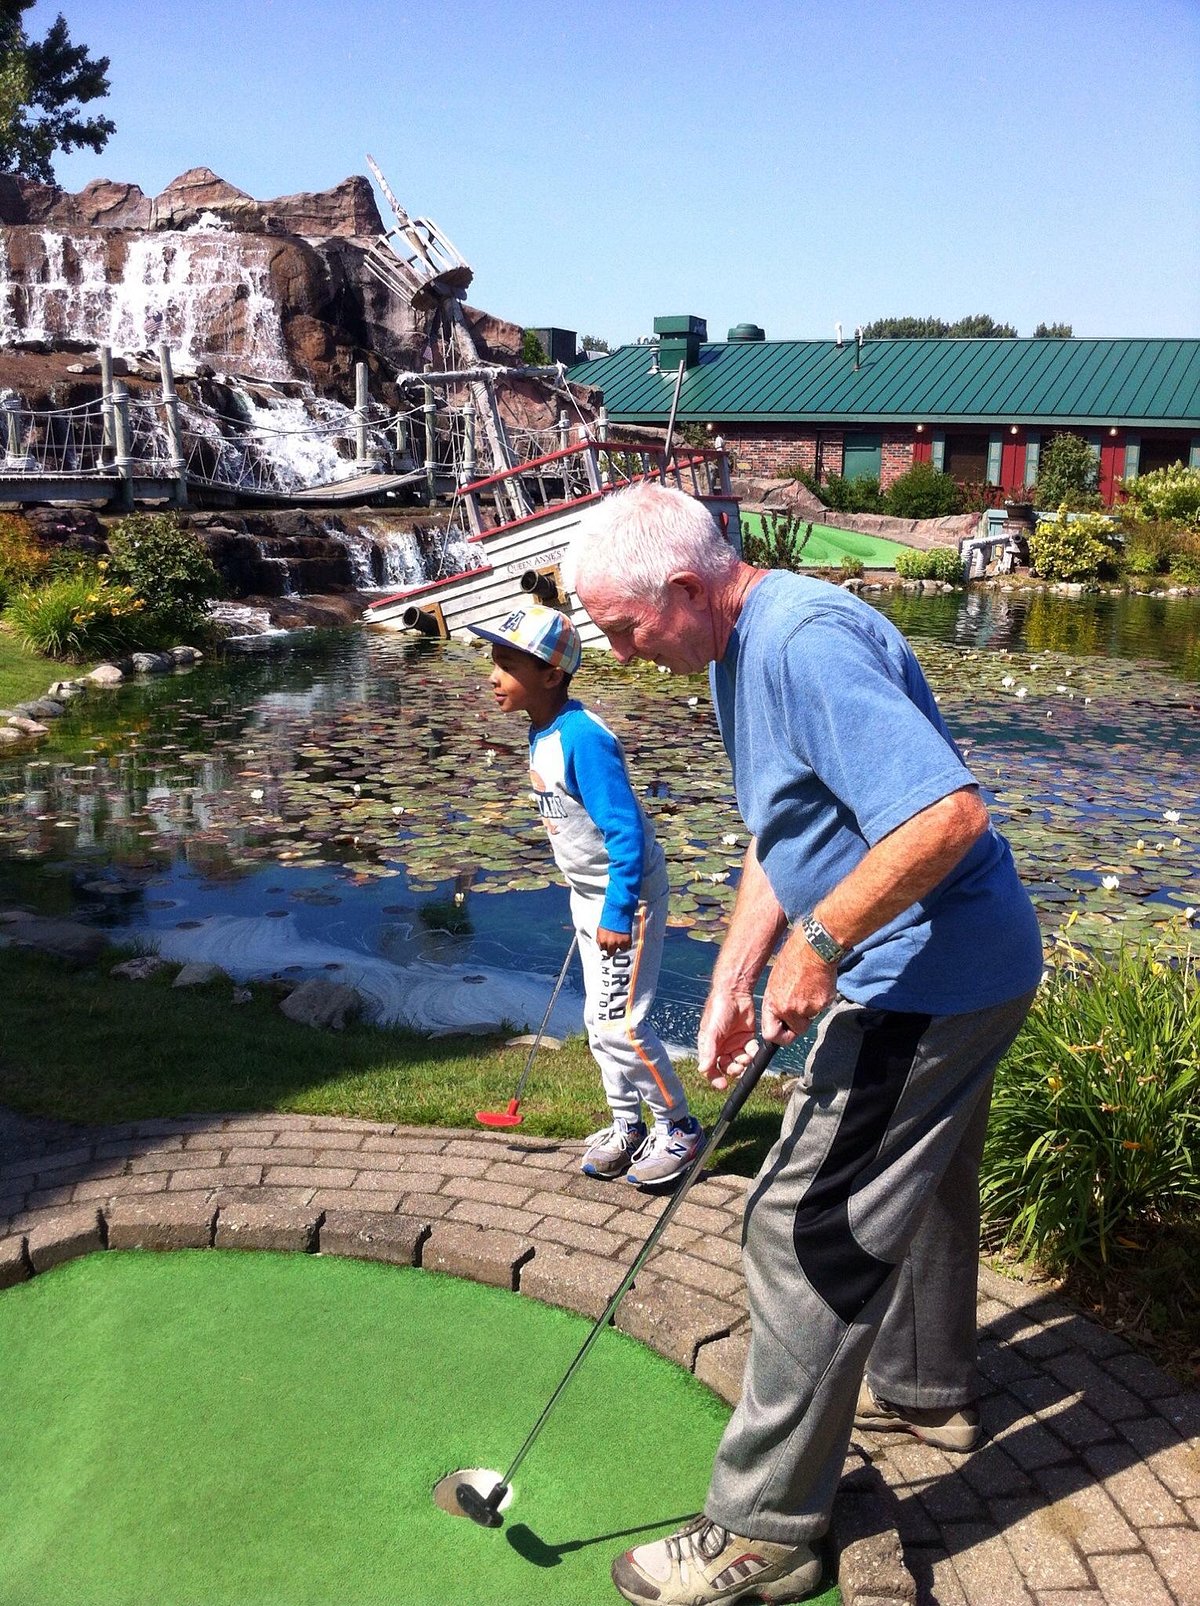 The Gem Miniature Golf at Grand Hotel - Mackinac Island Tourism Bureau